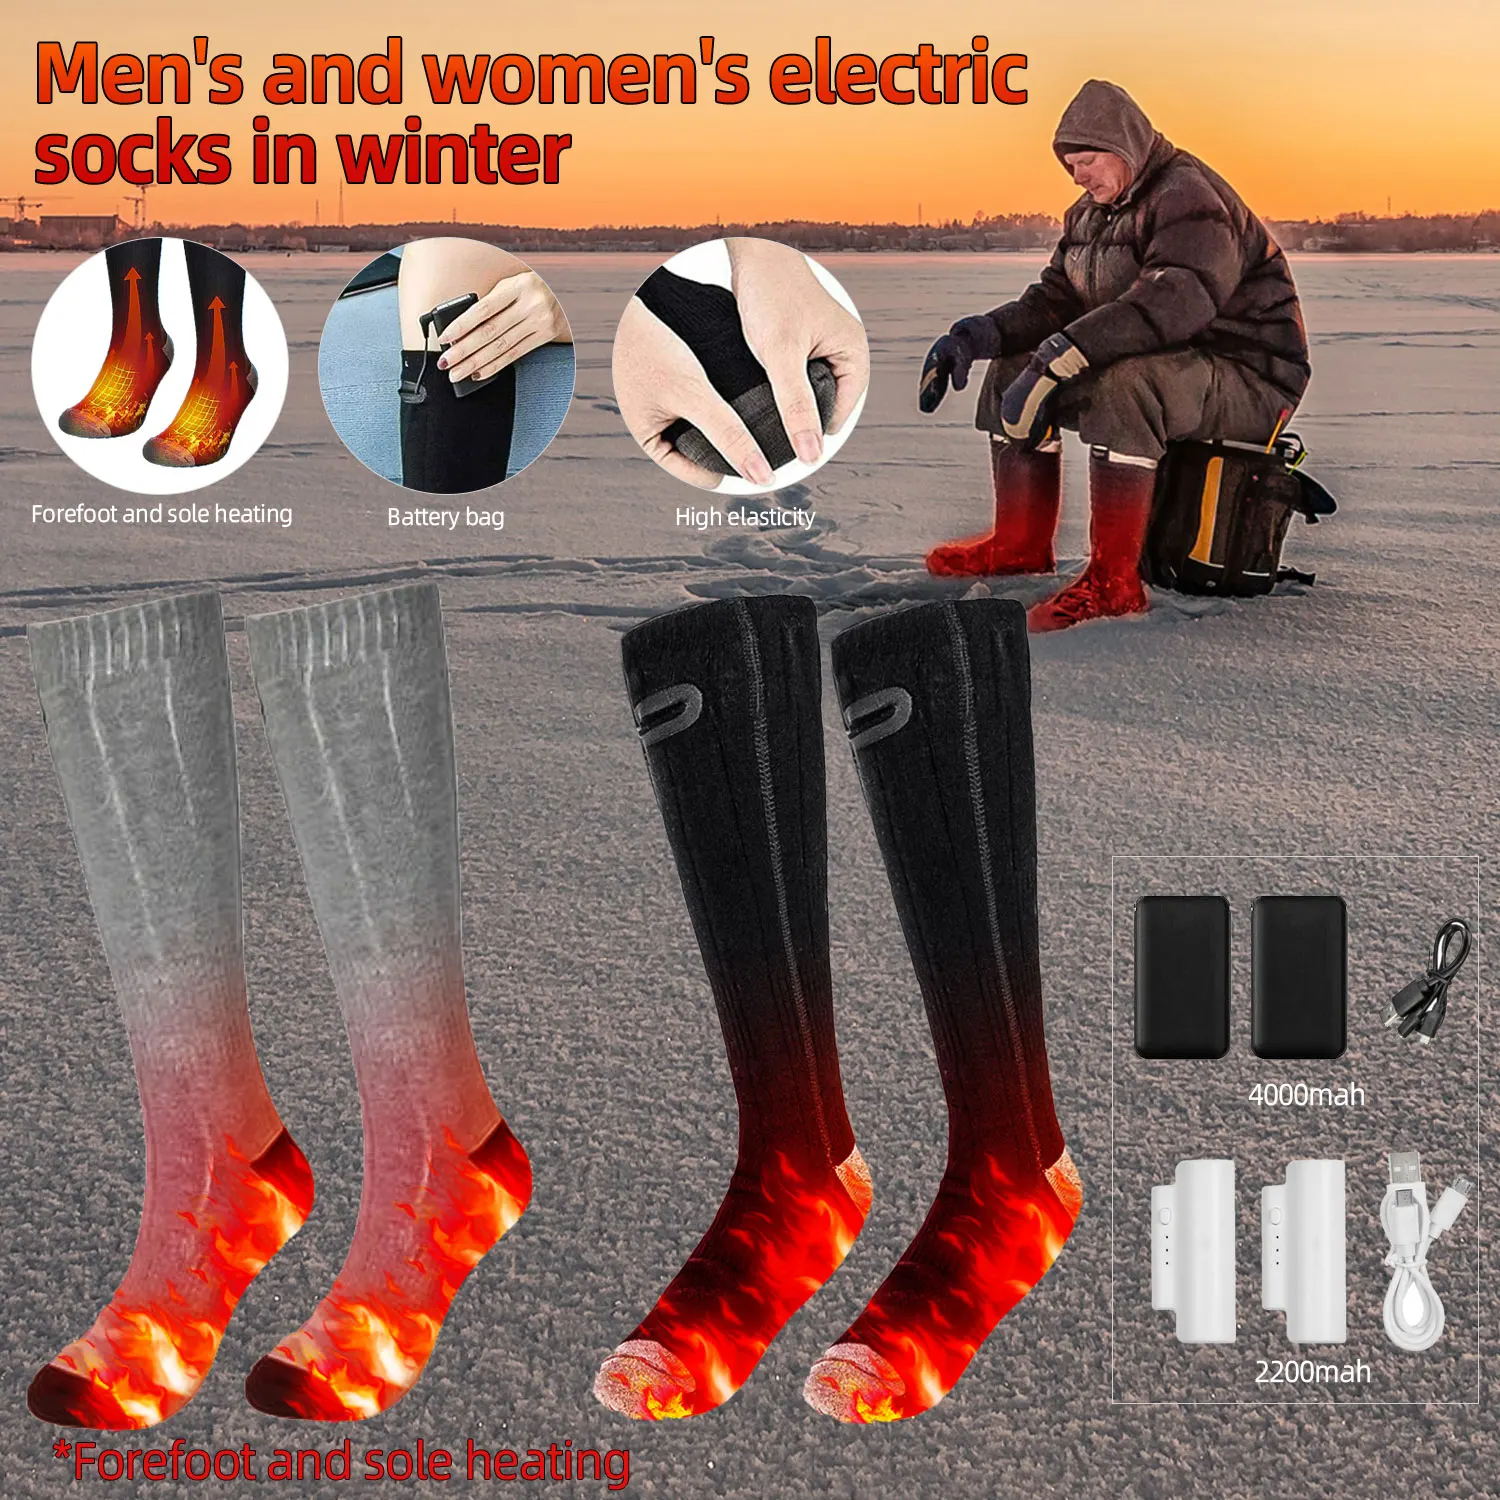 

Winter Warm Socks Outdoor Electric Heated Socks Thermosocks Boot Feet Warmer with 2200mah/4000mah Battery for Ski Cycling Hiking